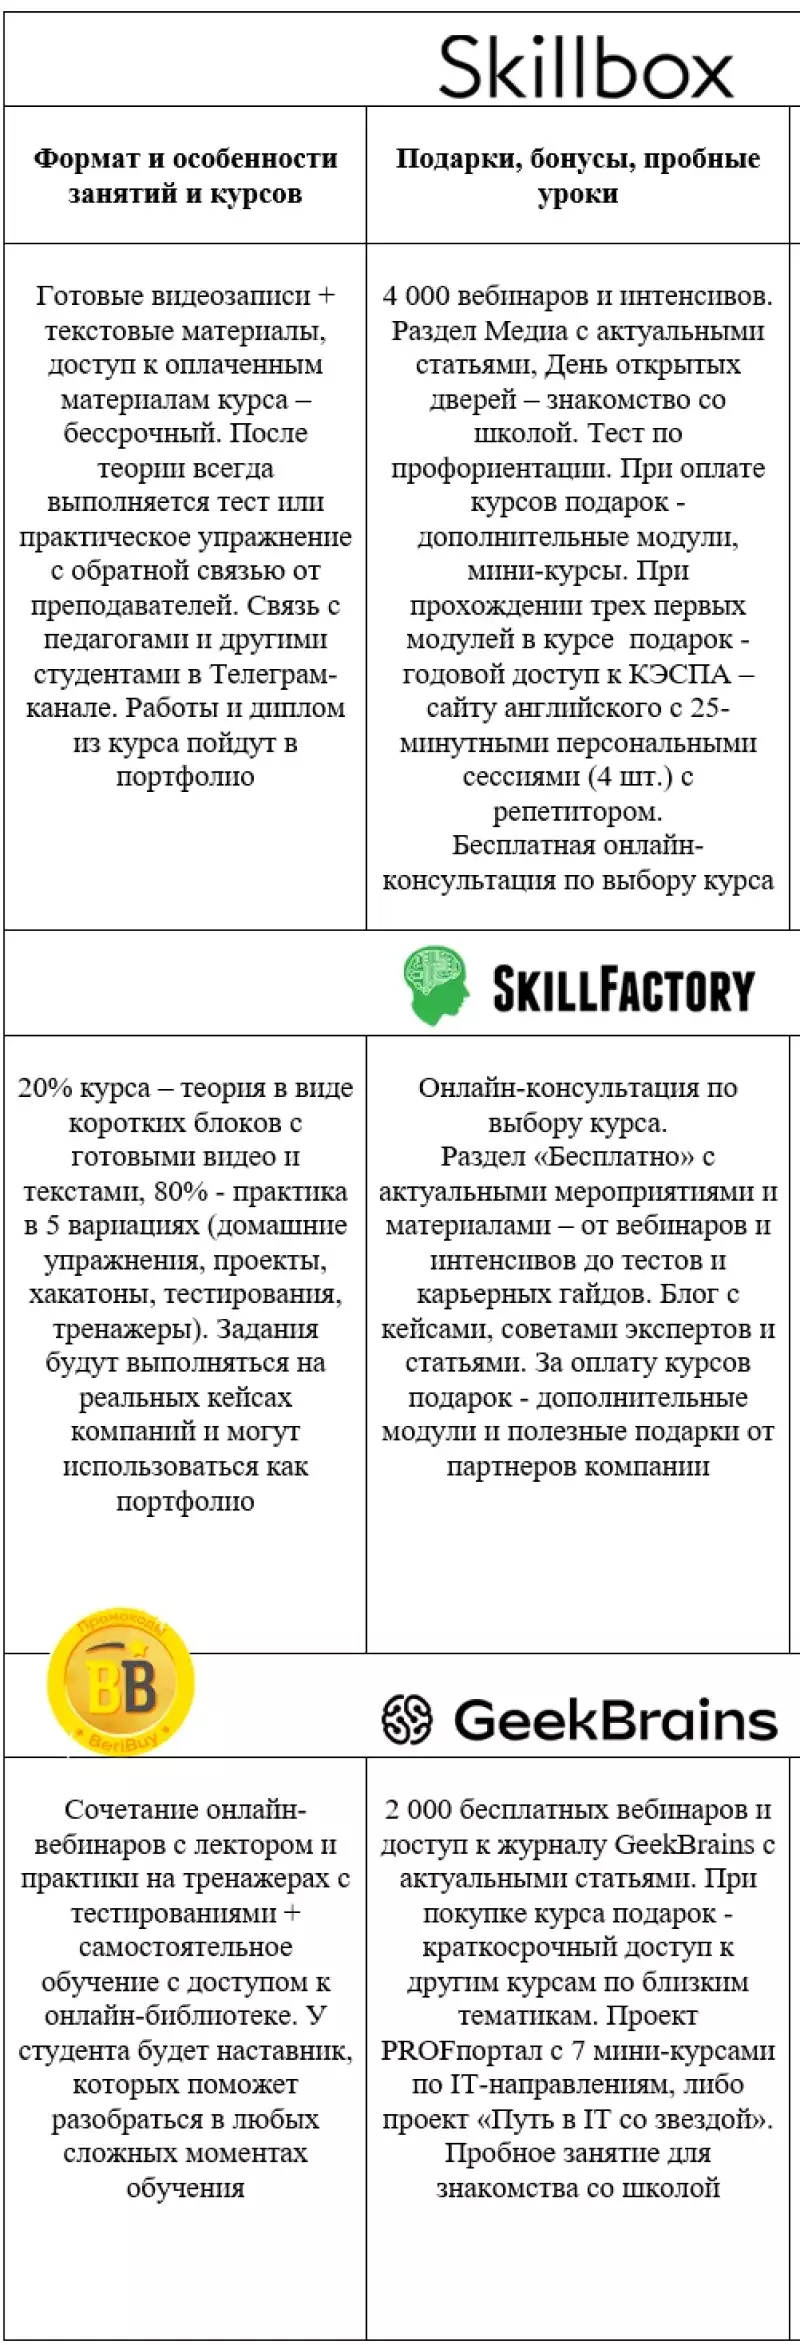 Skillbox Skillfactory Geekbrains